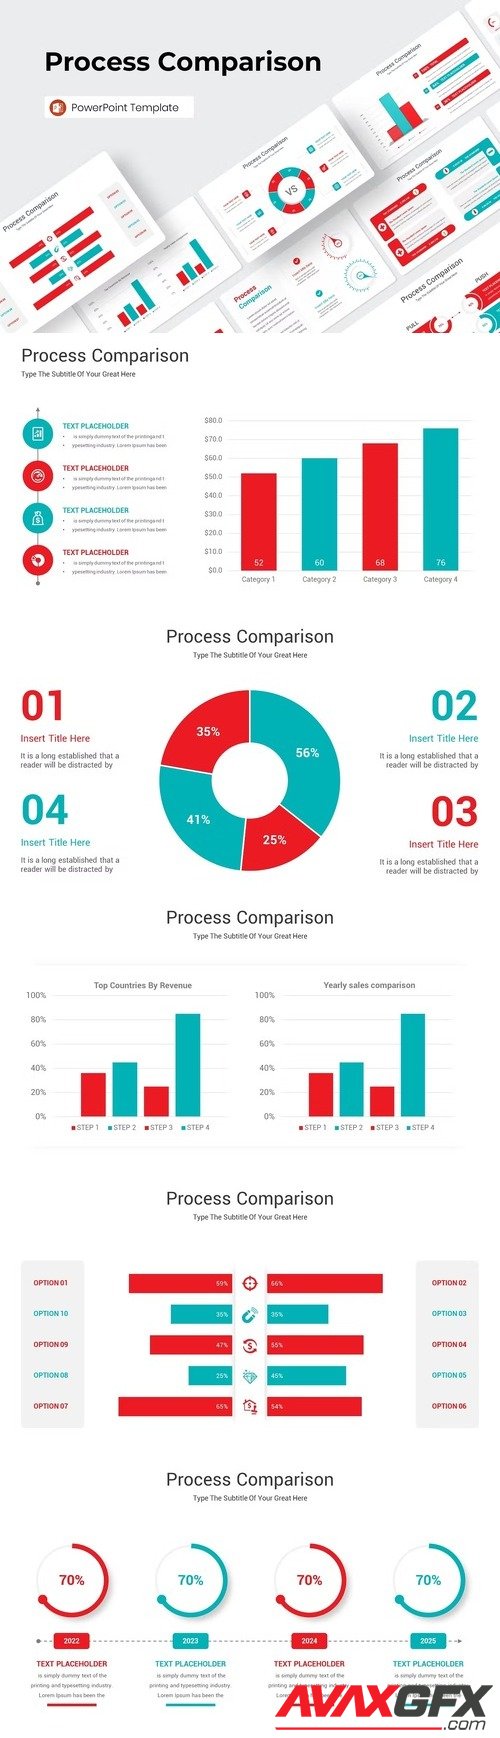 Process Comparison PowerPoint Template [PPTX]